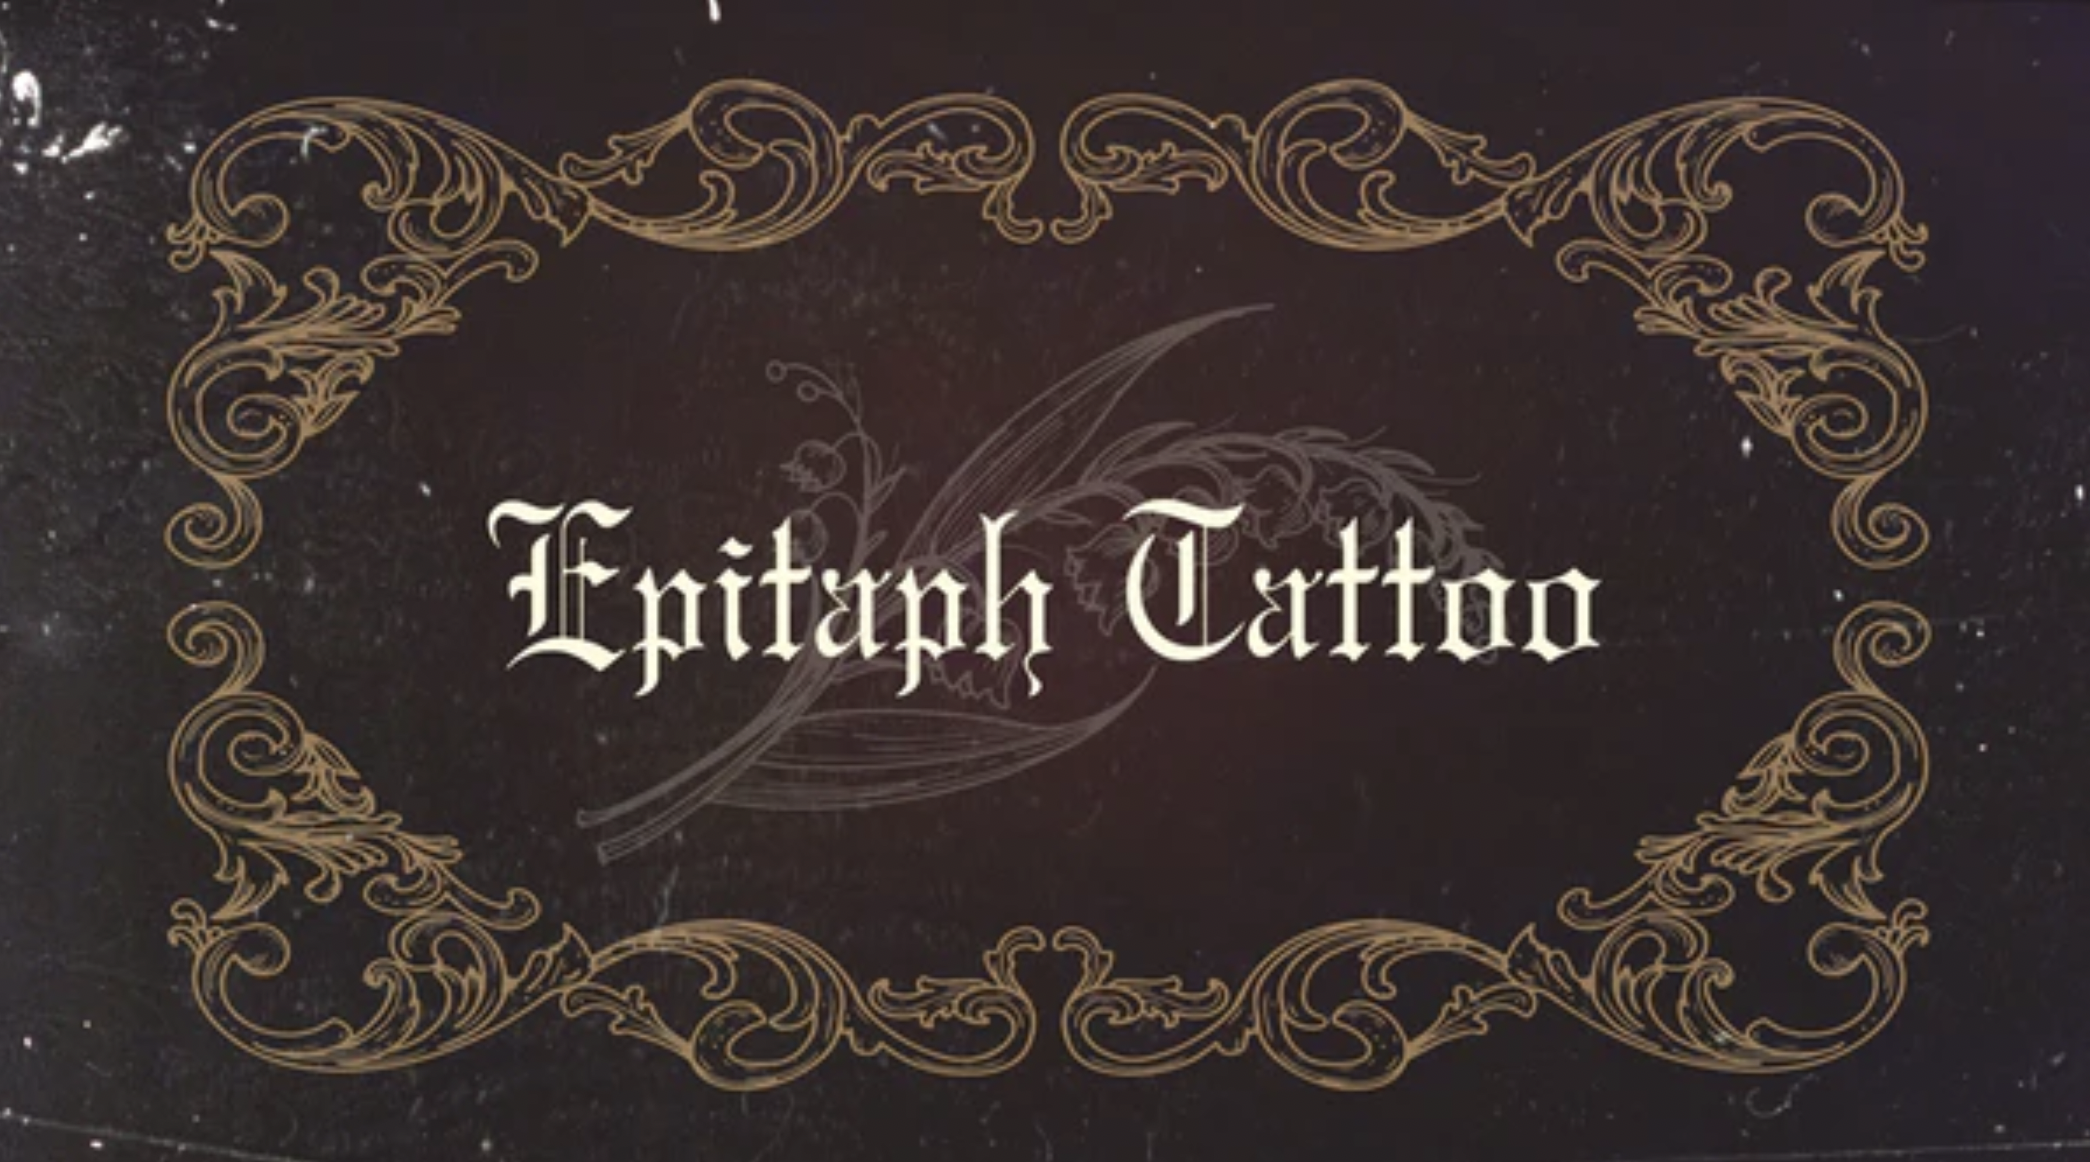 Epitaph Tattoo